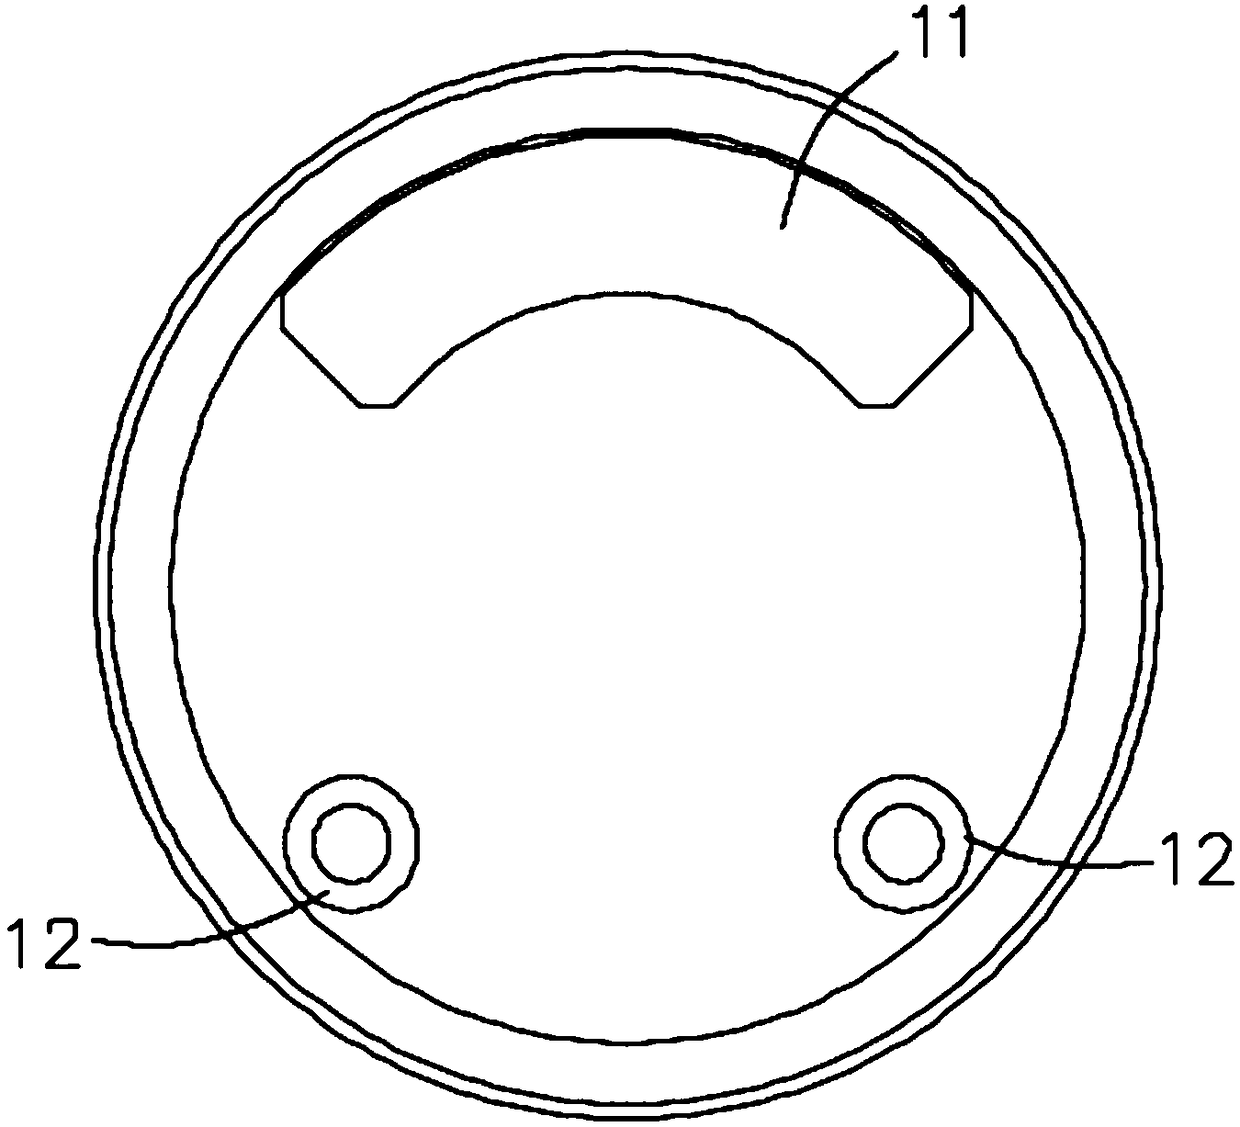 Angle locating and locking mechanism